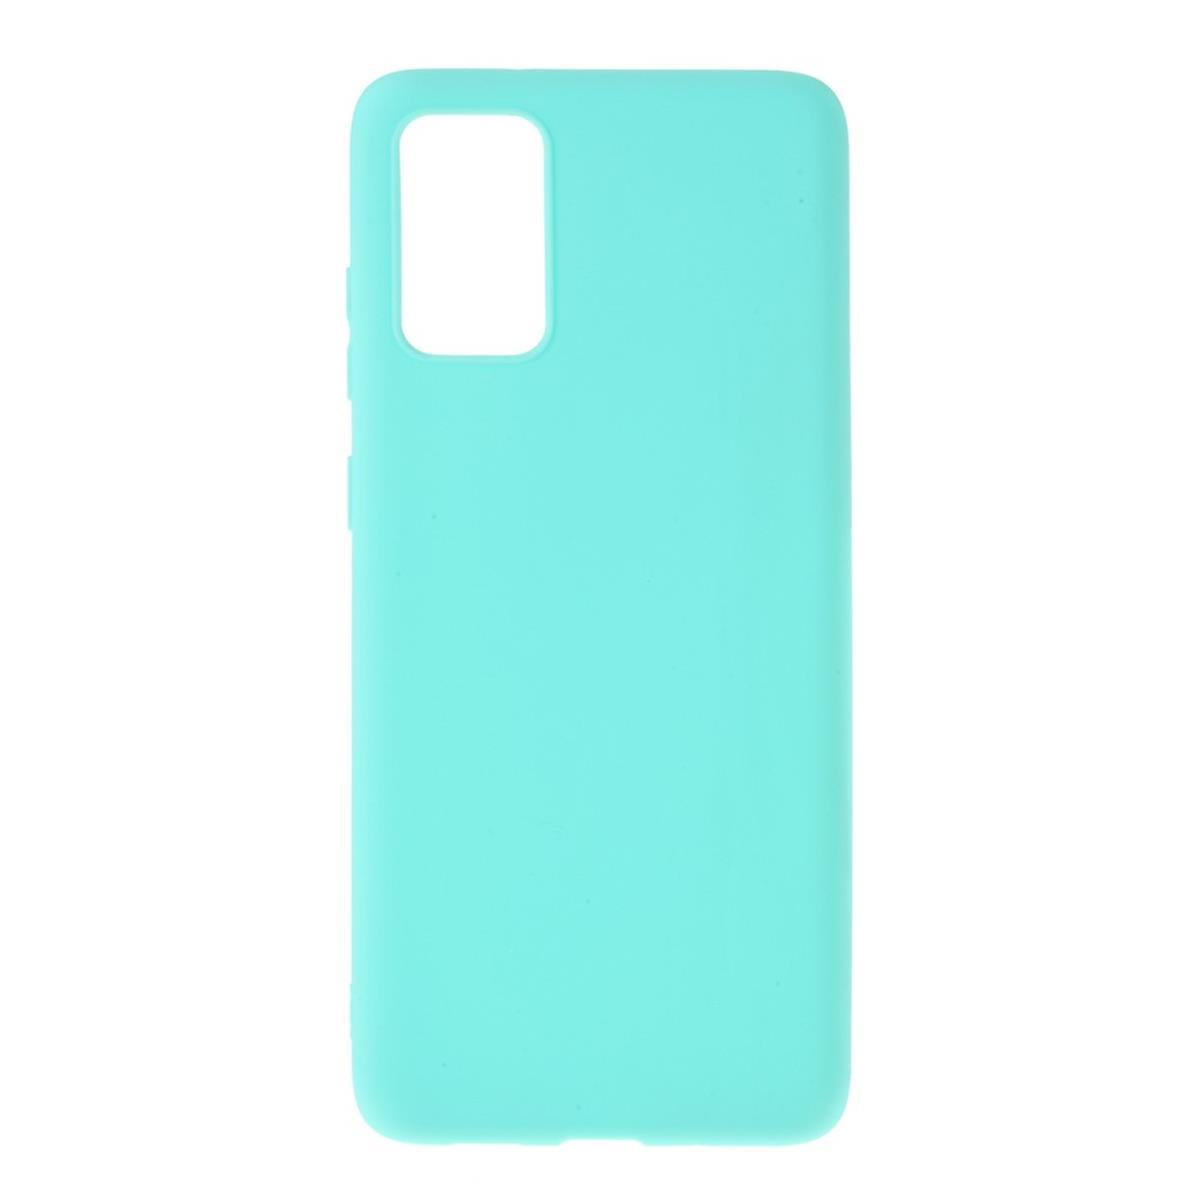 Hülle für Samsung Galaxy A41 Handyhülle Silikon Case Cover Bumper Matt Grün